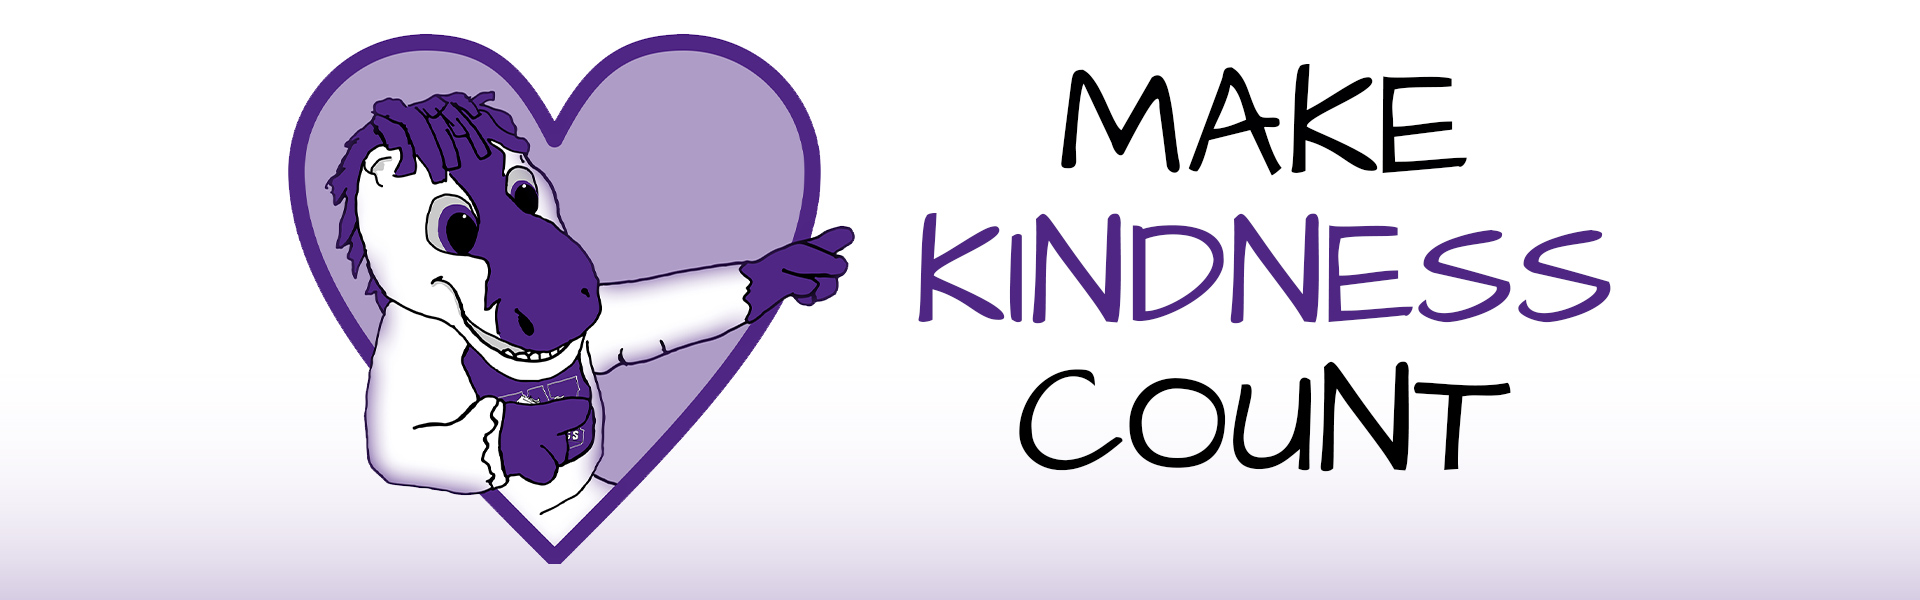 Make Kindness Count